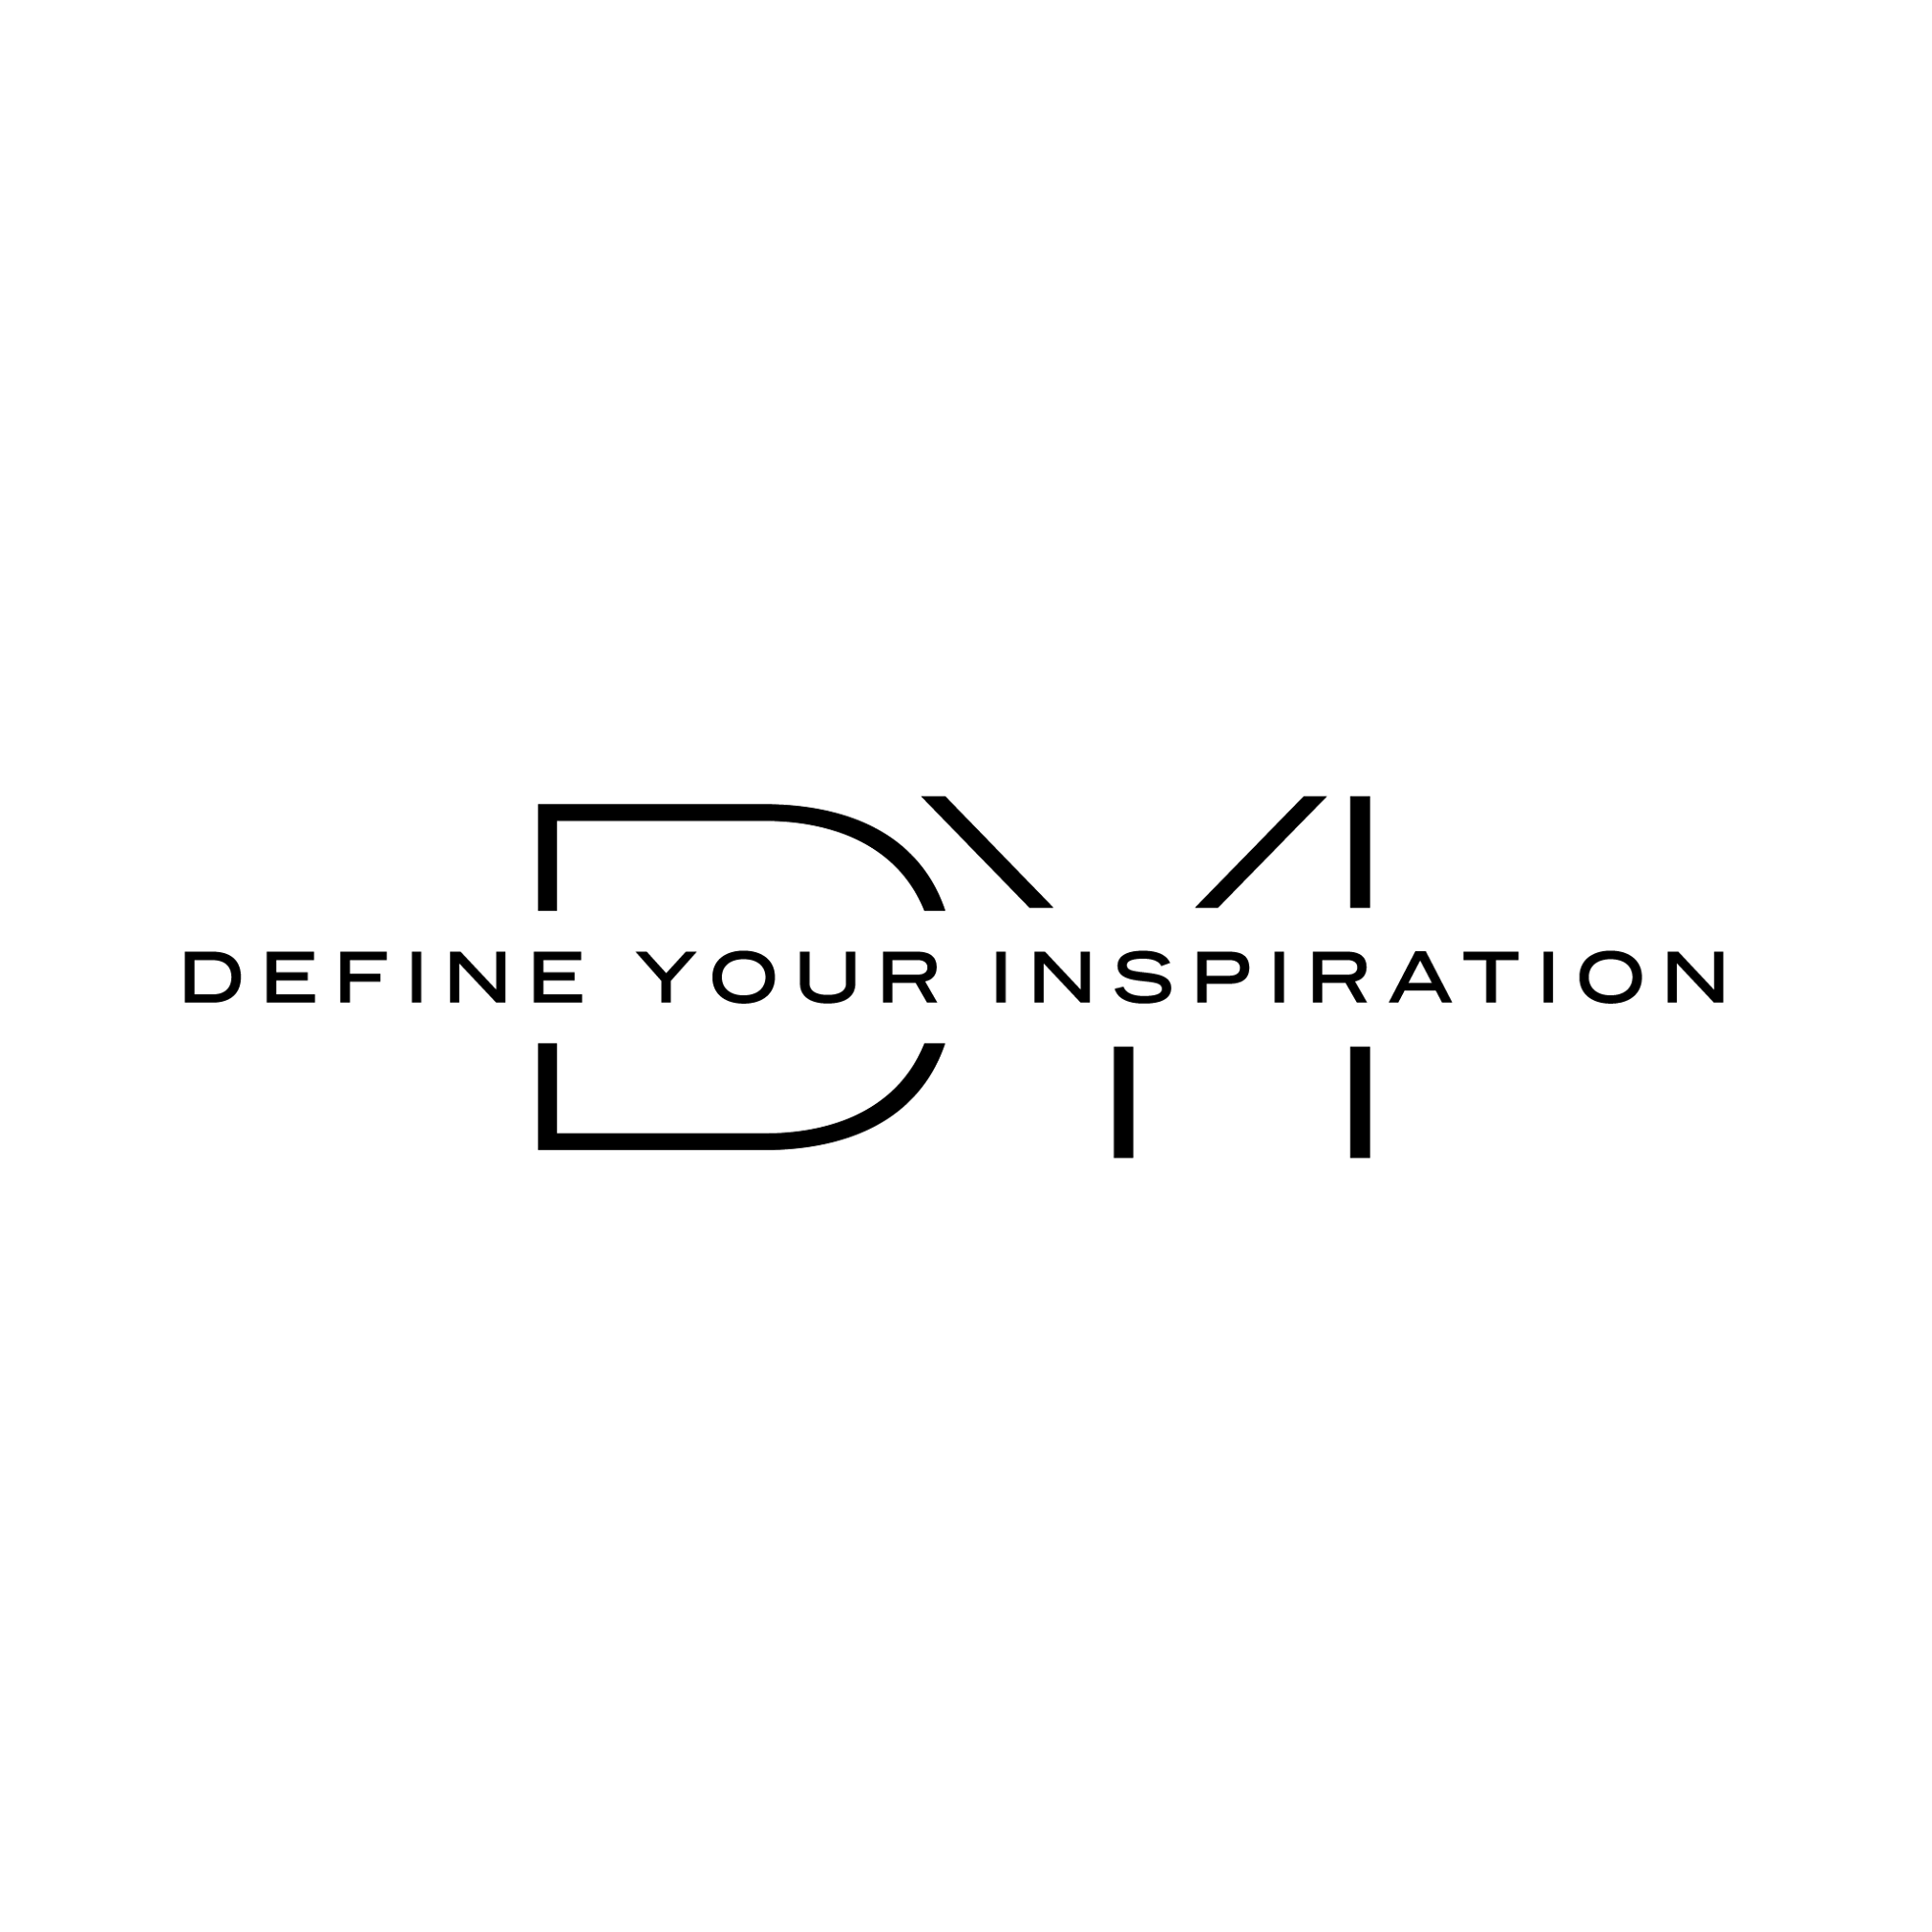 Define Your Inspiration